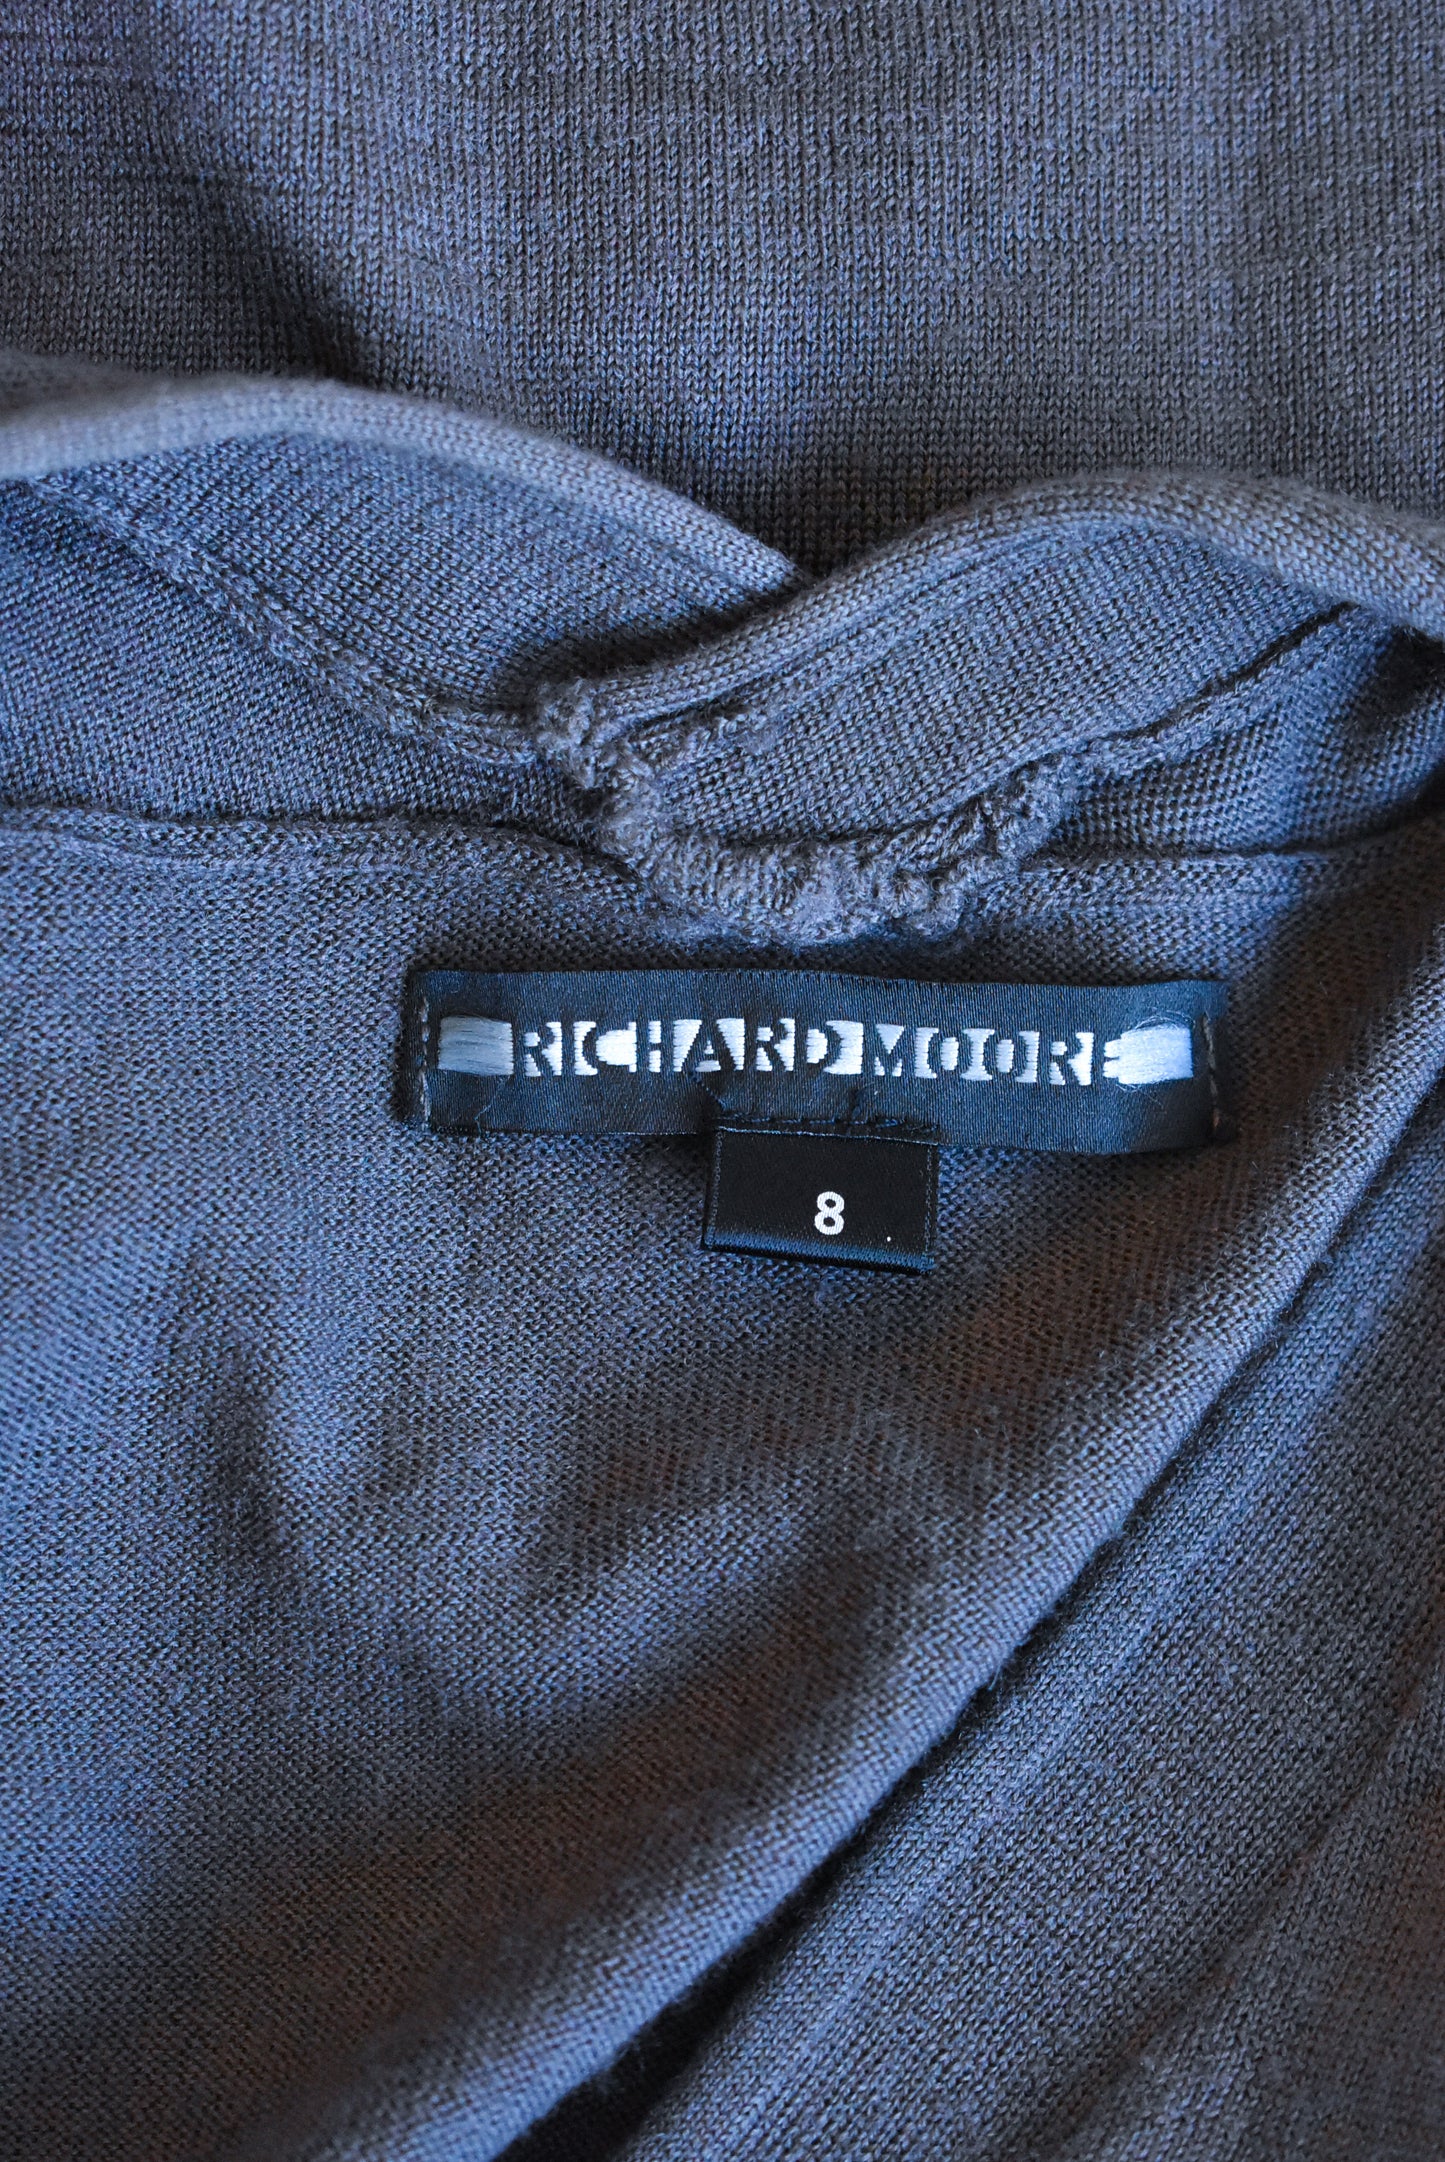 Richard Moore brown merino cardigan, size 8